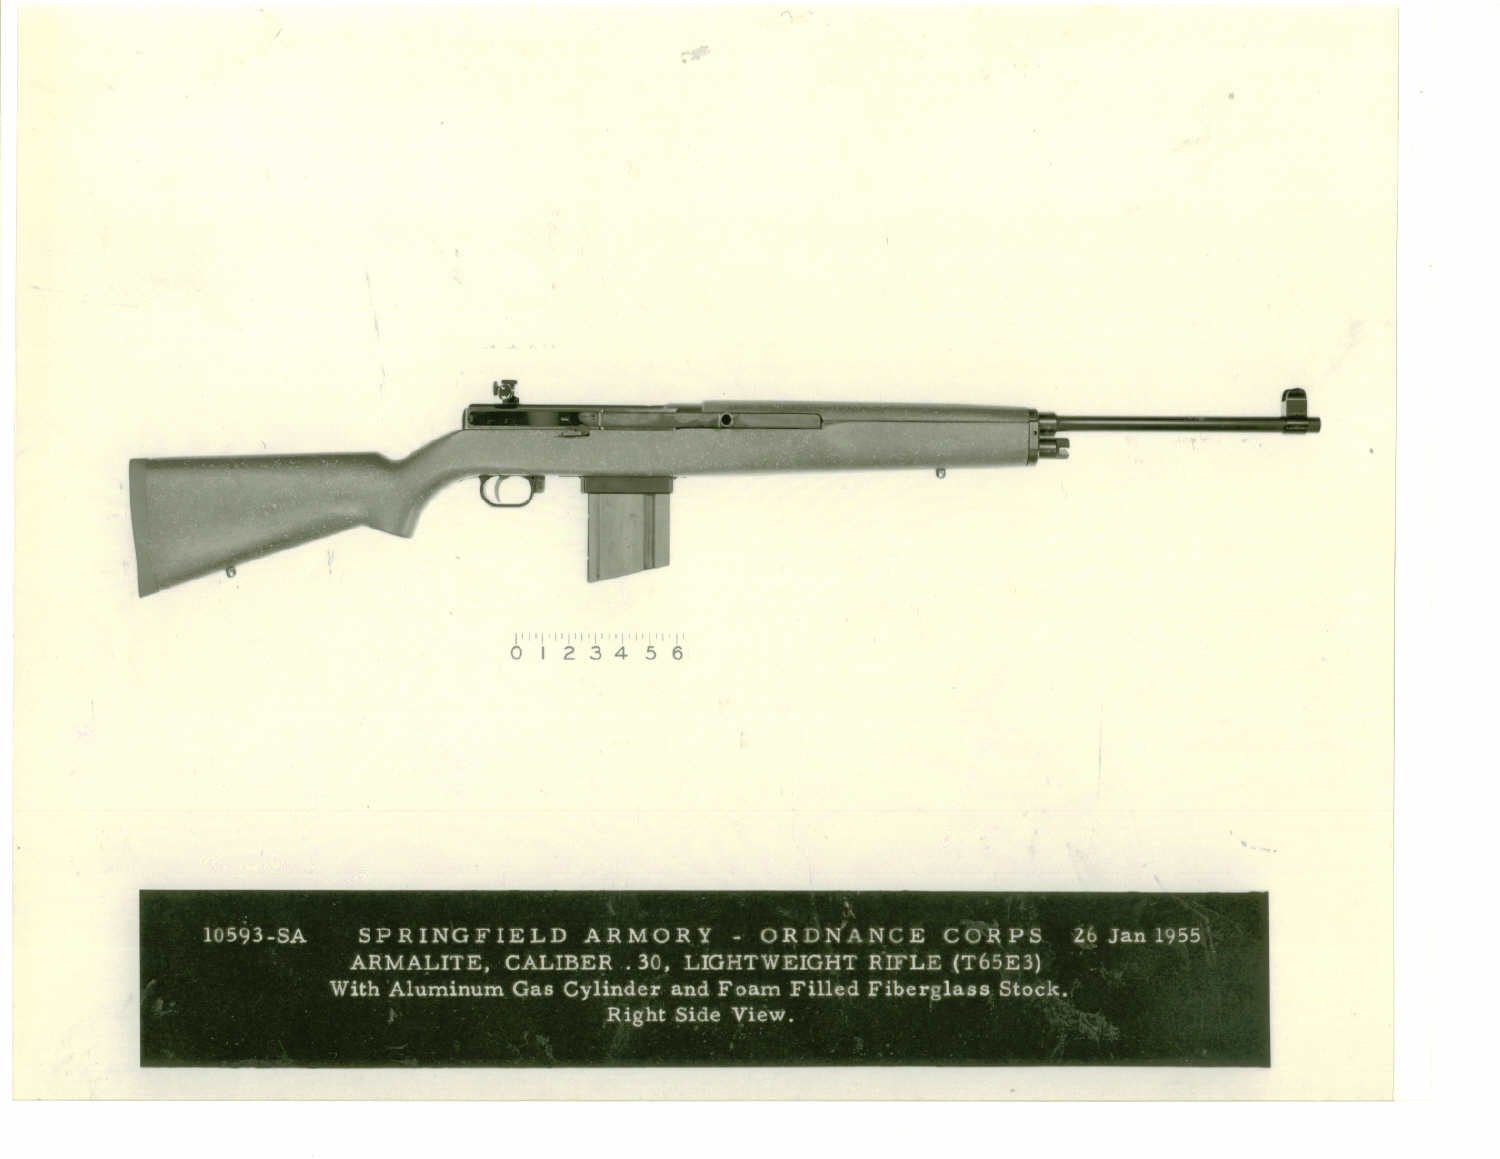 Armalite Caliber .30 Lightweight Rifle, T65E3 - Right Side View foam filled fiberglass stock 10593-SA.A.1